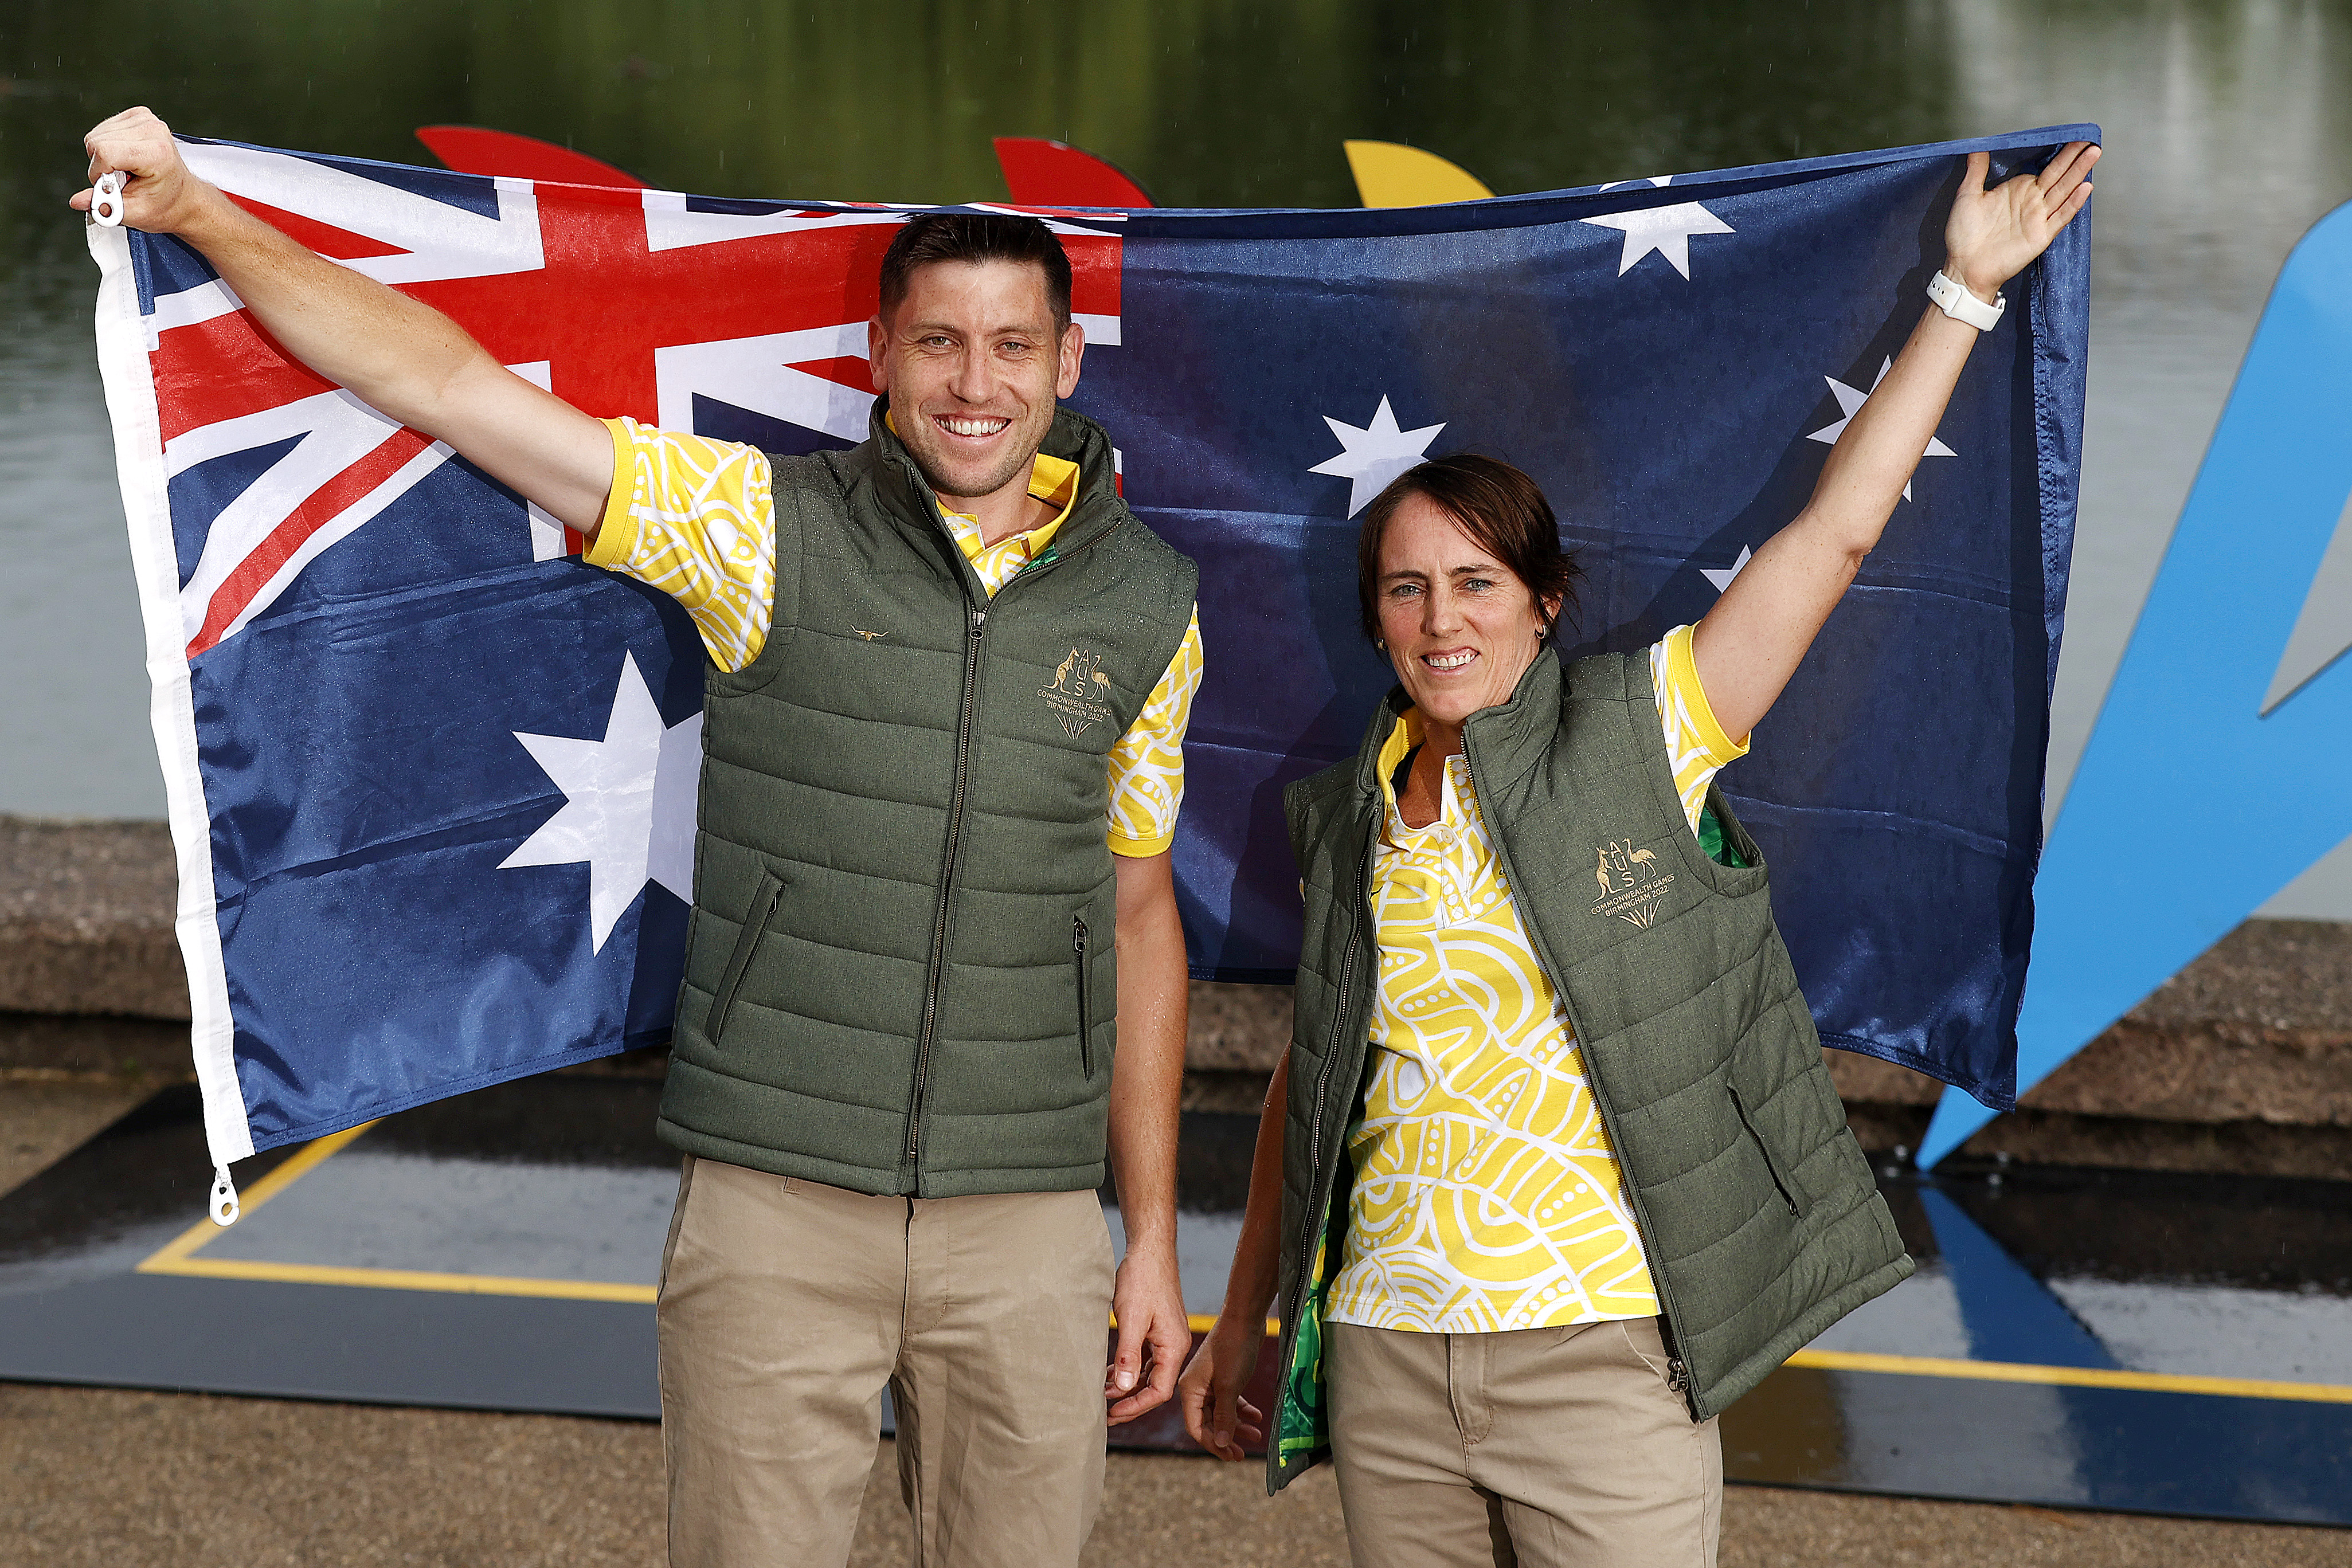 Squash player Rachael Grinham and Kookaburras co-captain Eddie Ockenden hold up the Australian fkag